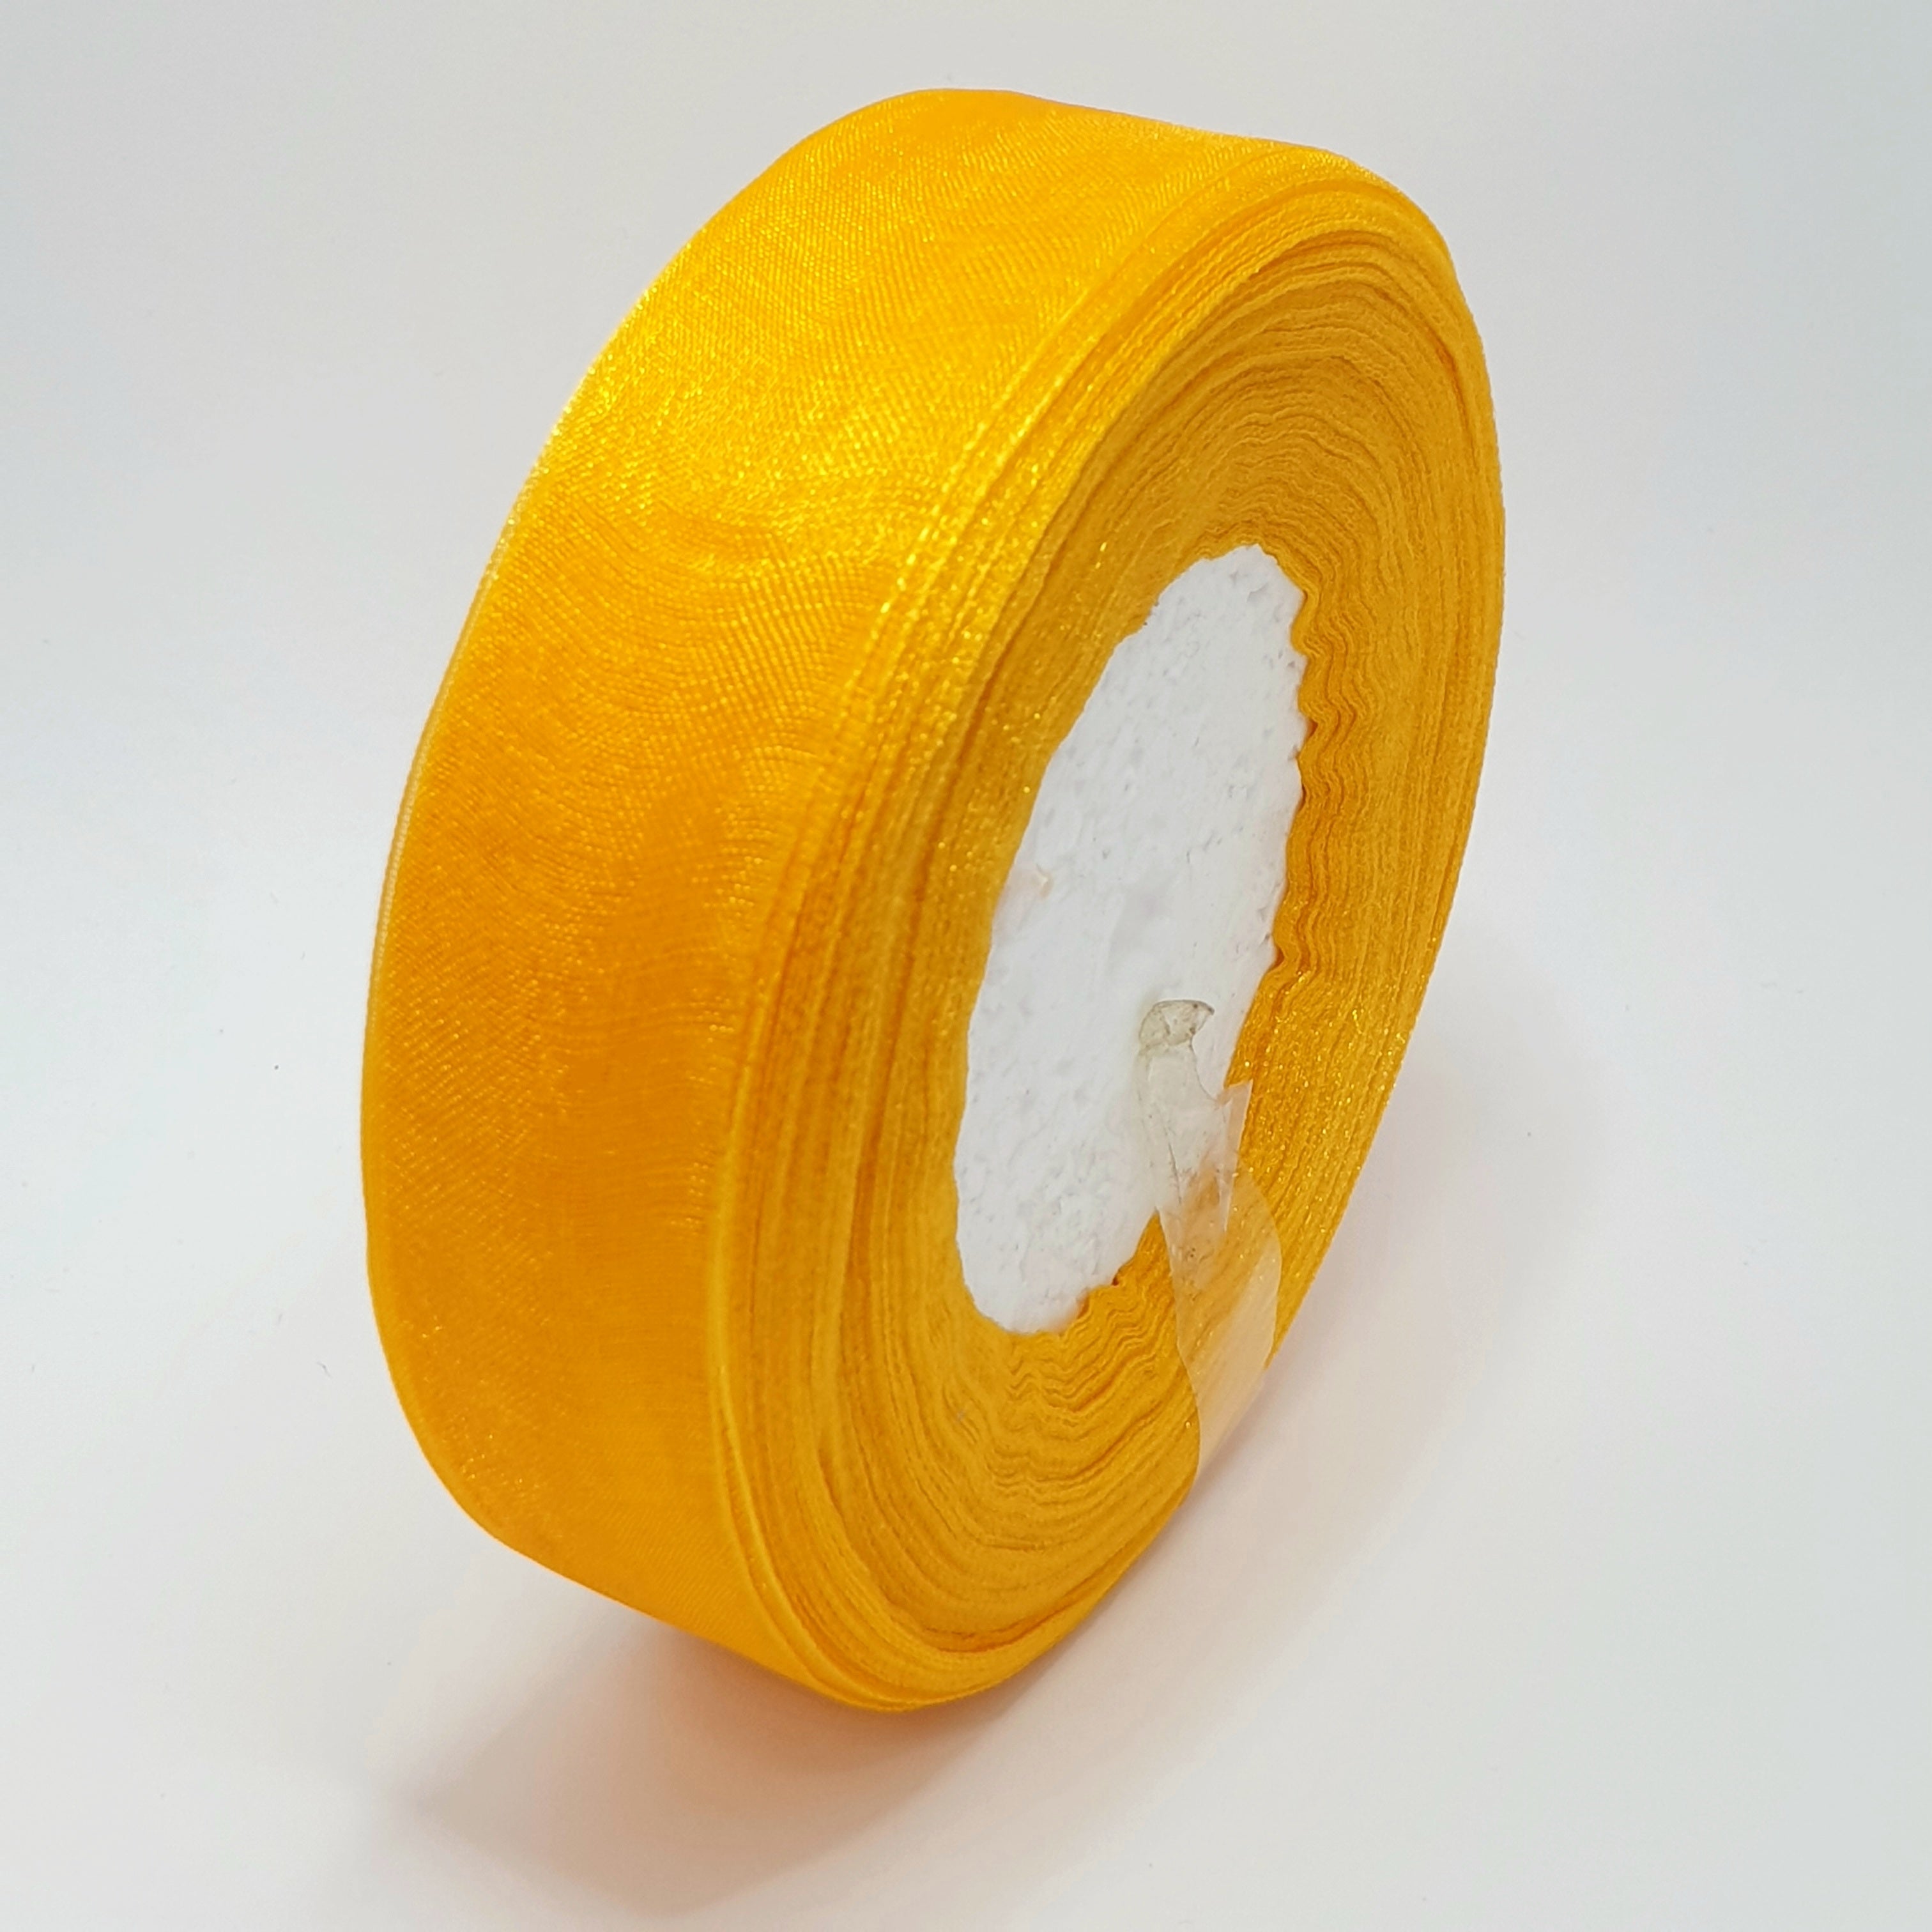 MajorCrafts 25mm 45metres Sheer Organza Fabric Ribbon Roll Mustard Yellow R1016